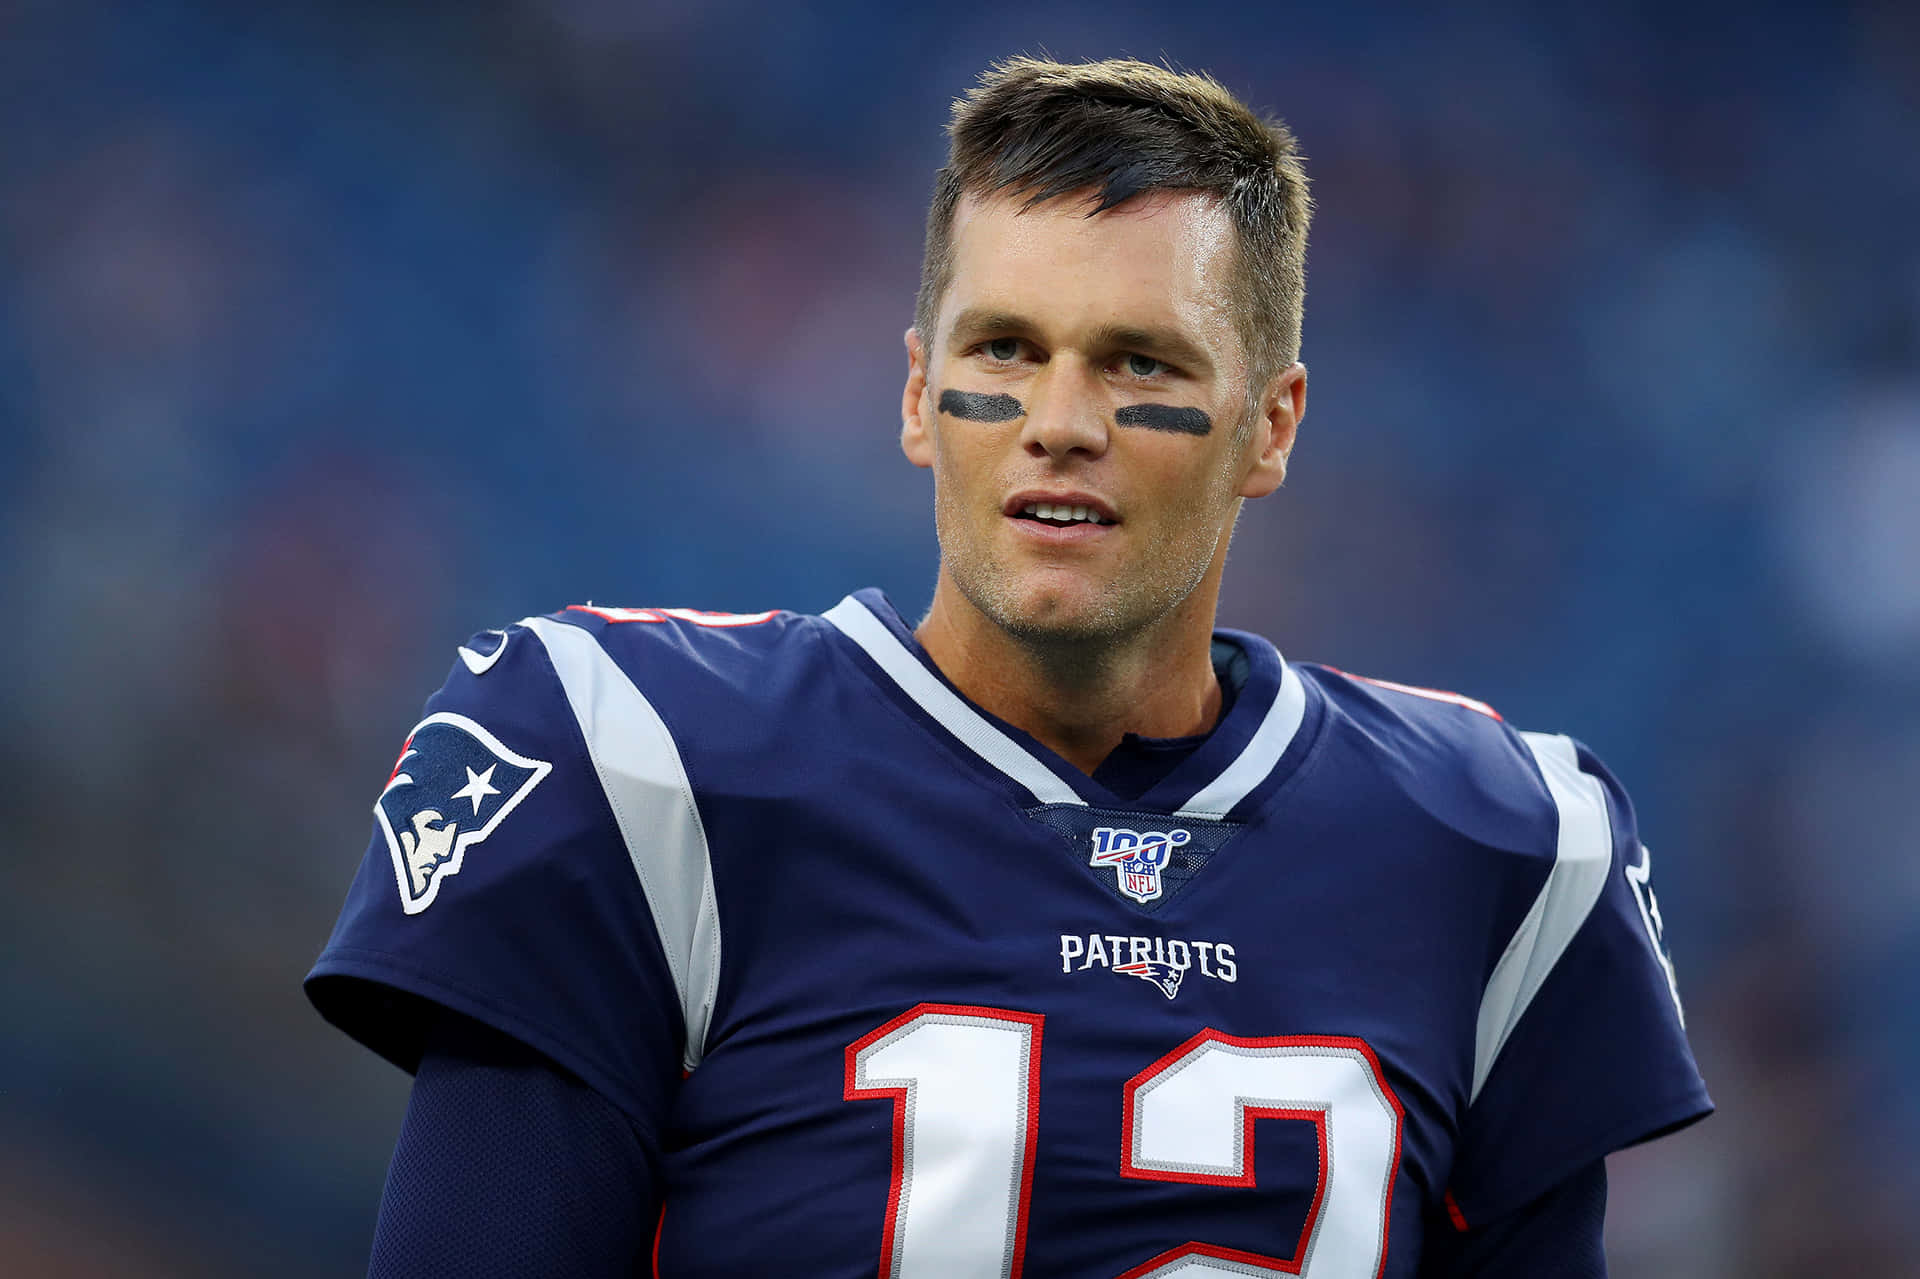 Tom Brady leads the Patriots to glory in Super Bowl LIII